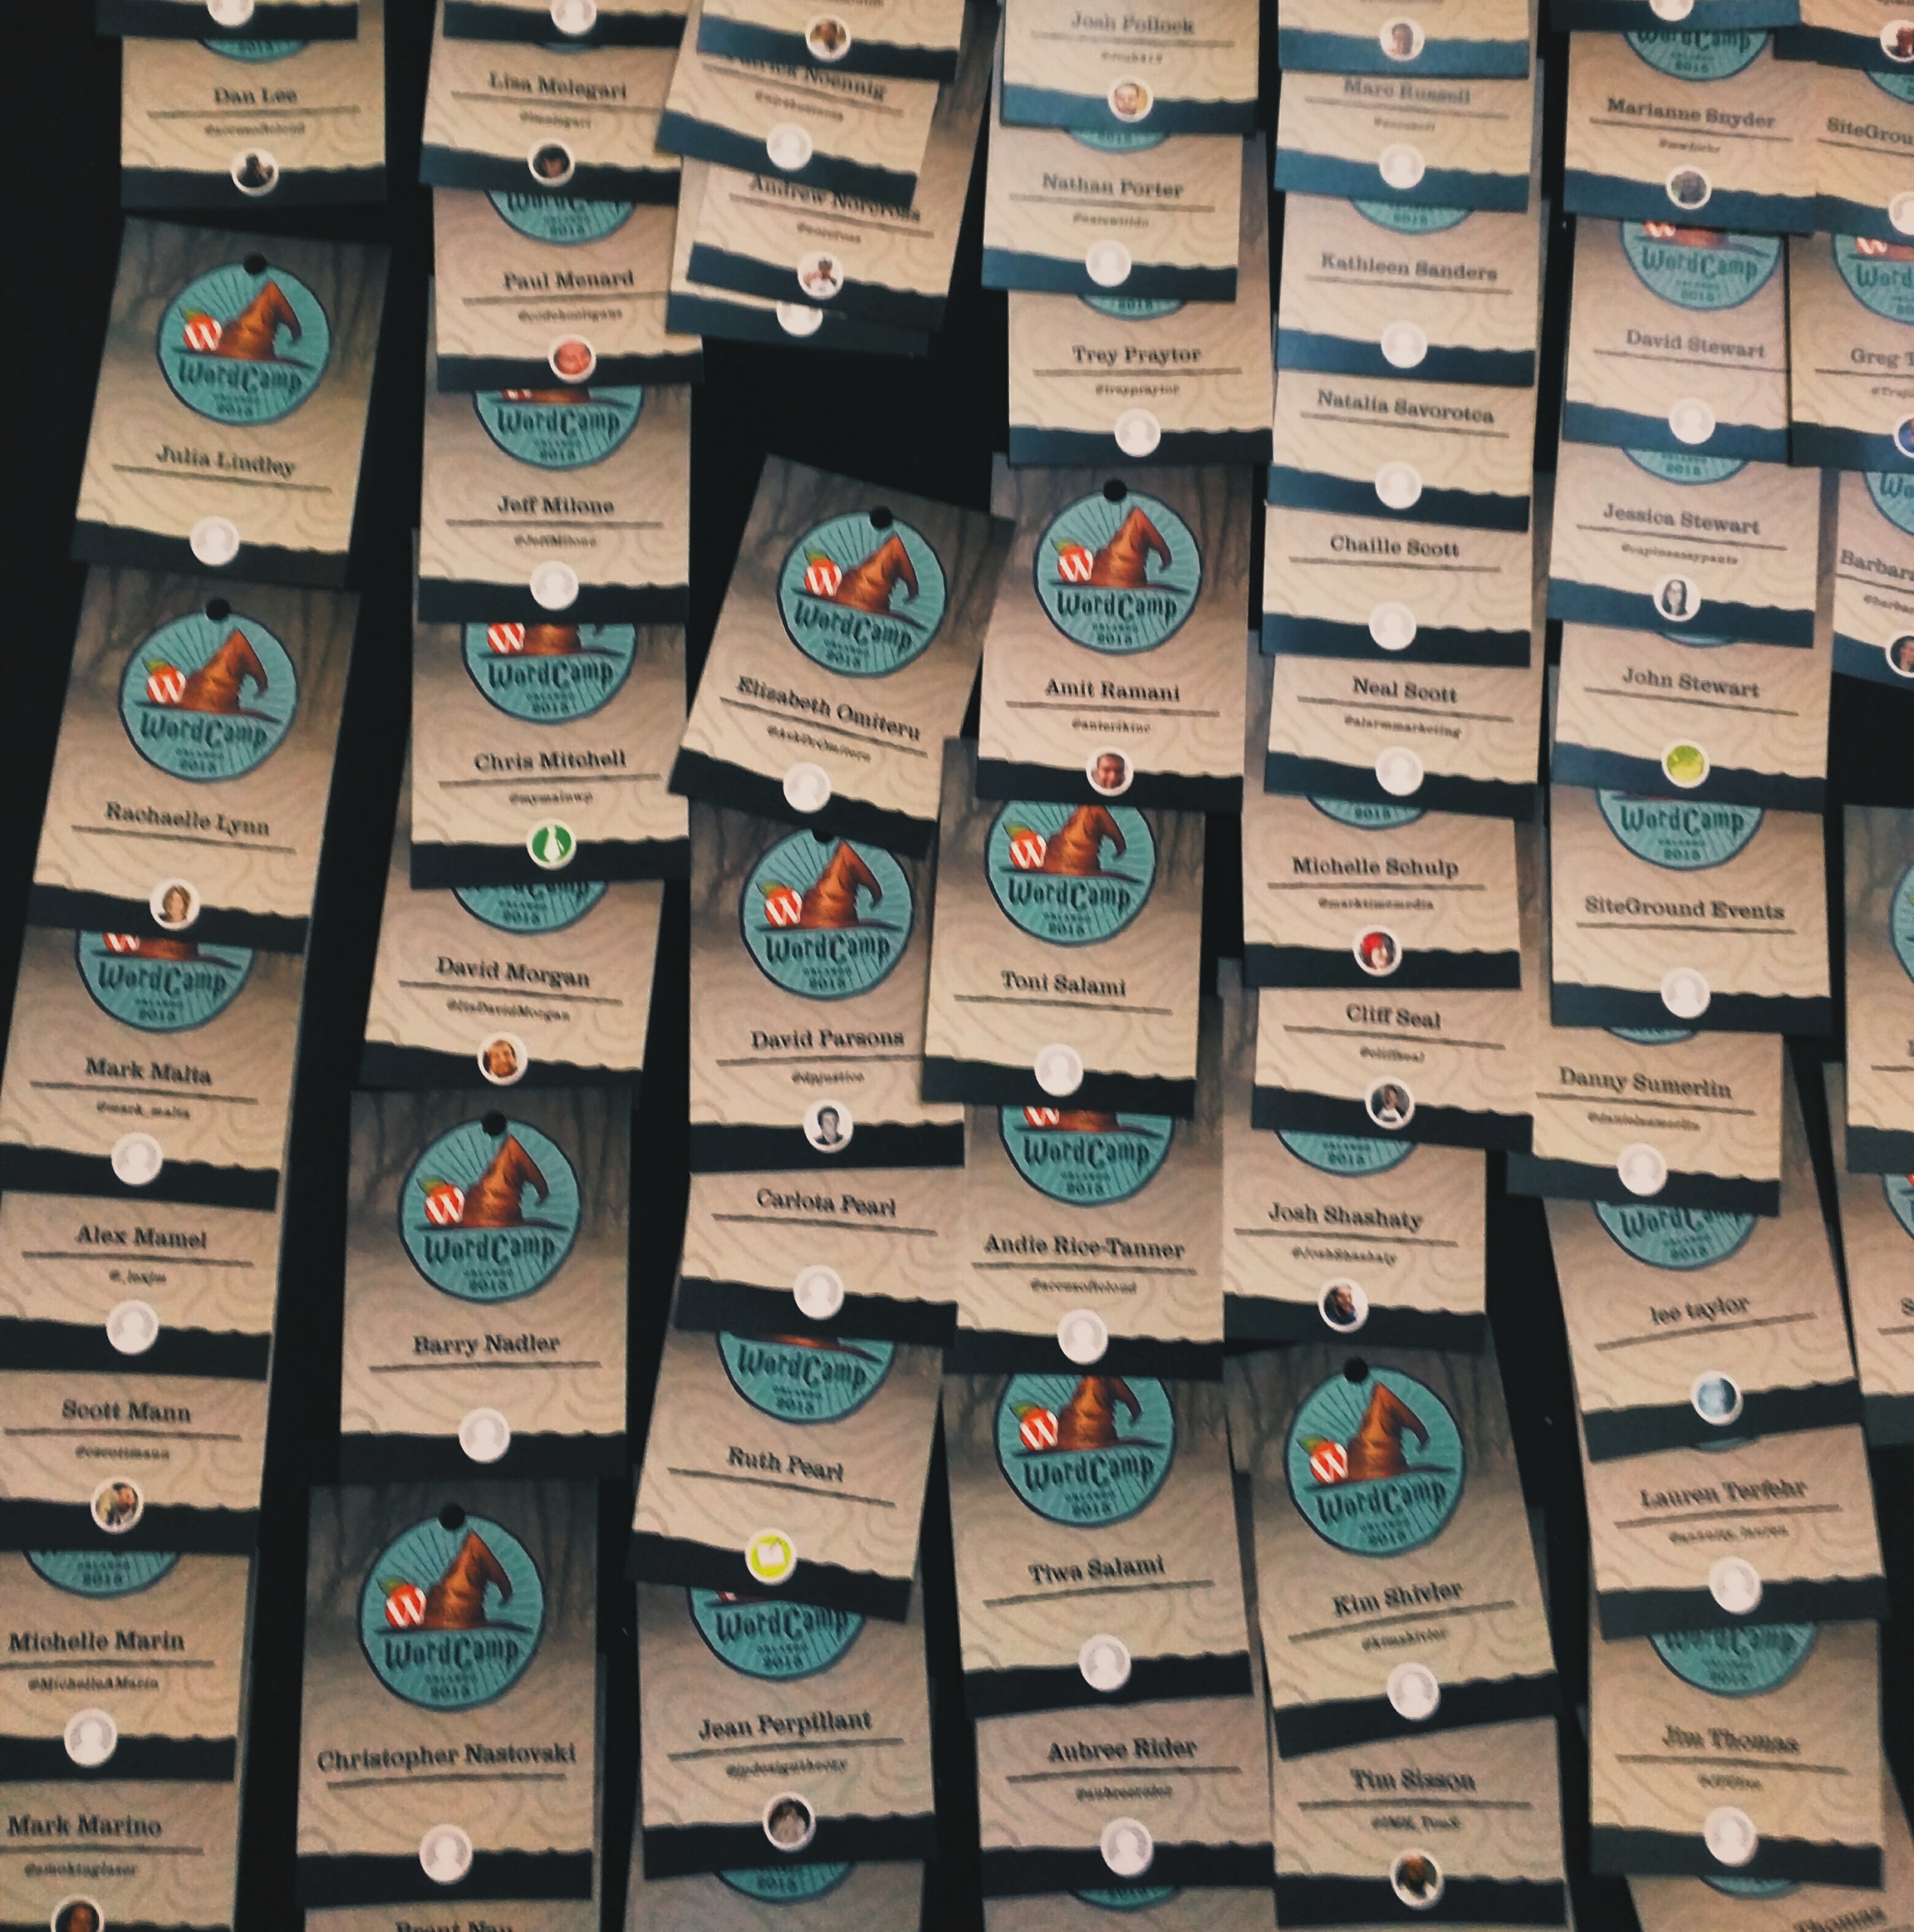 WordCamp Orlando 2015